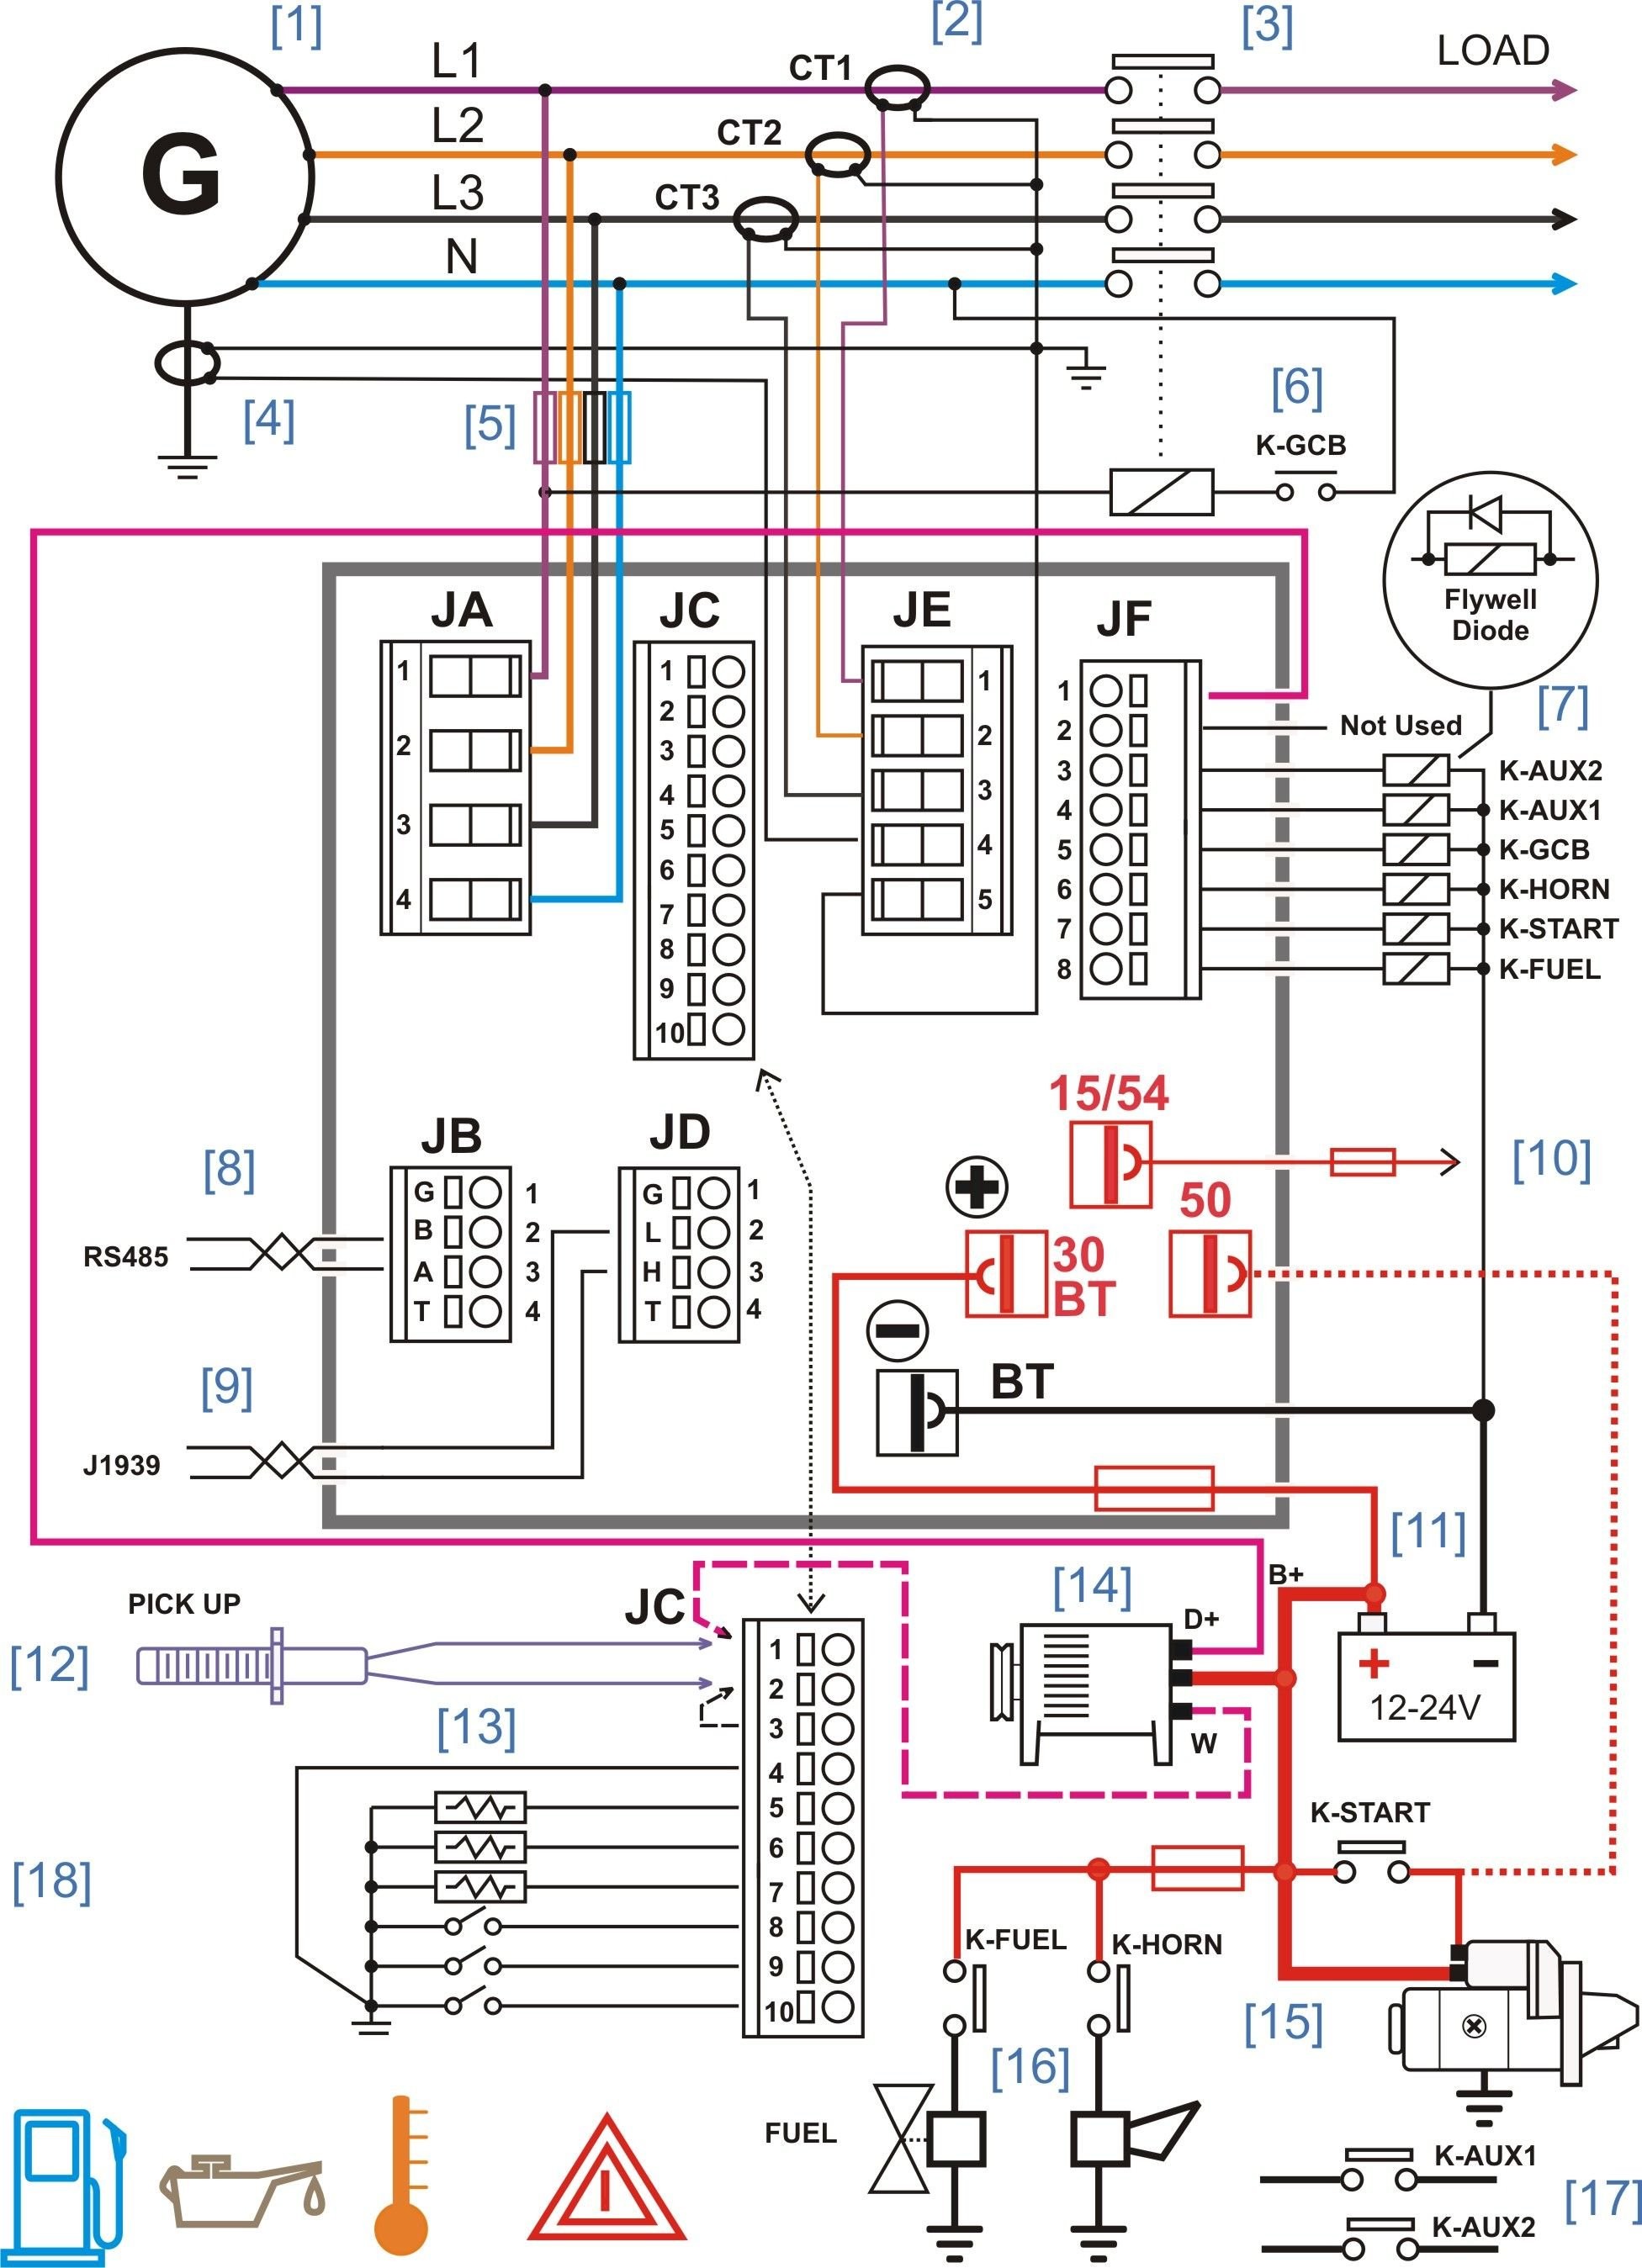 End Line Switch Wiring Diagram Beautiful Diesel Generator Control Panel Wiring Diagram End